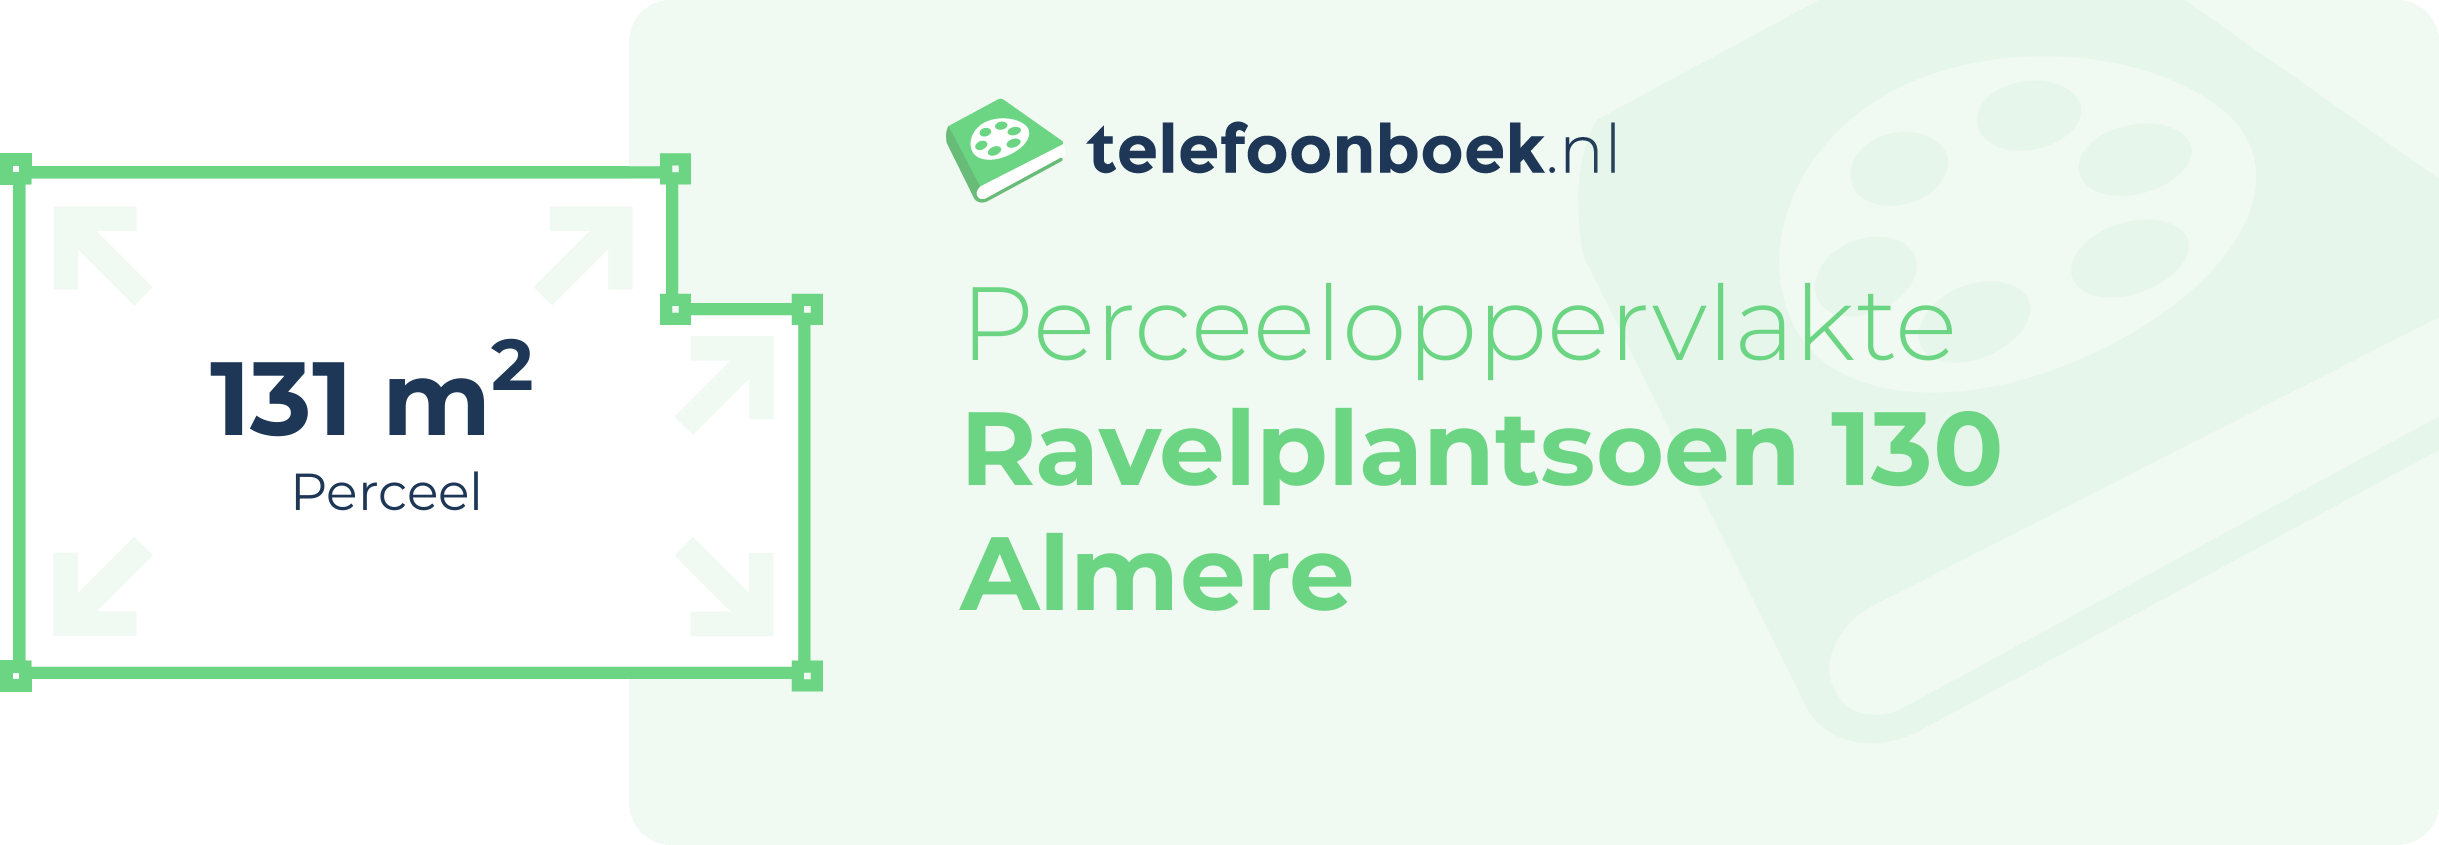 Perceeloppervlakte Ravelplantsoen 130 Almere